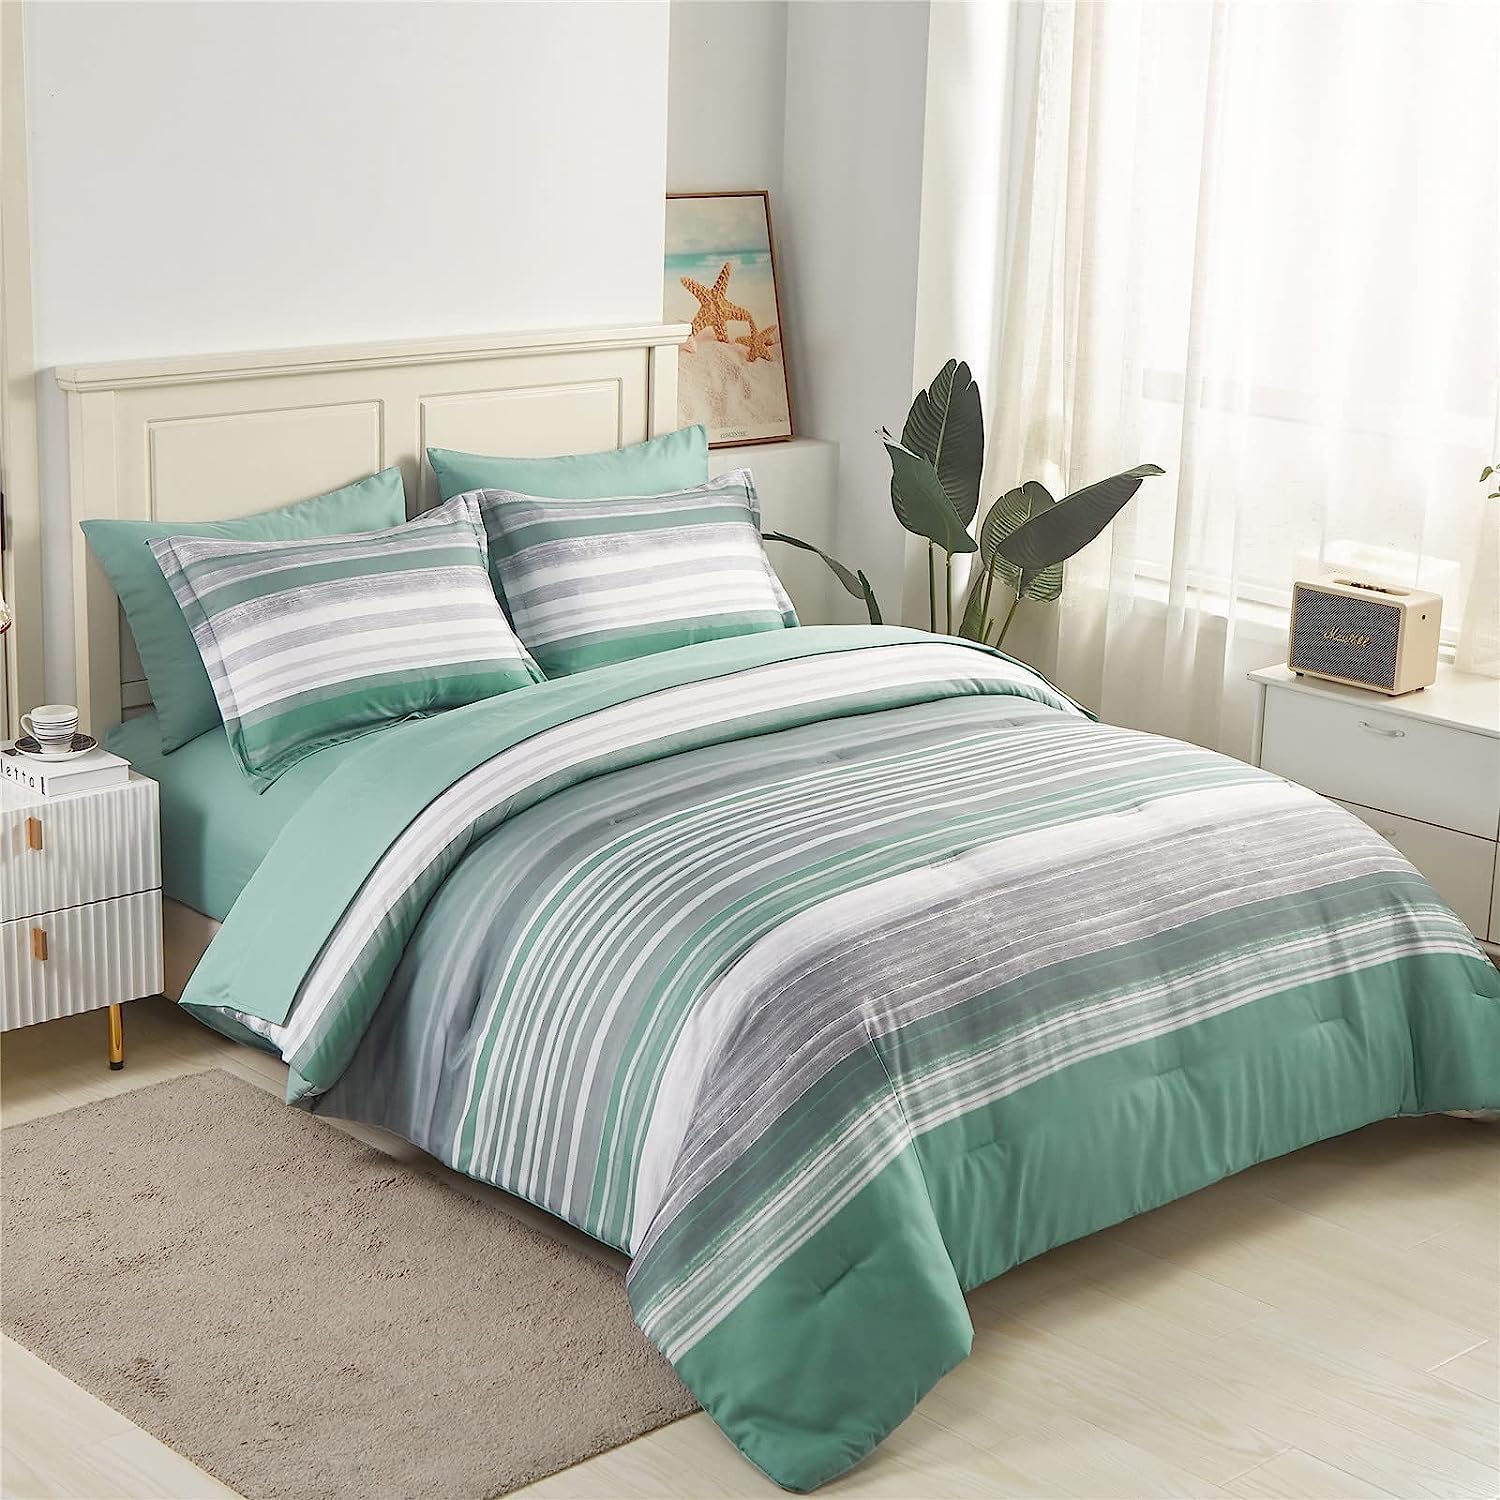 KAKIJUMN 5 Piece Bed in a Bag Stripe Comforter Set Twin Size